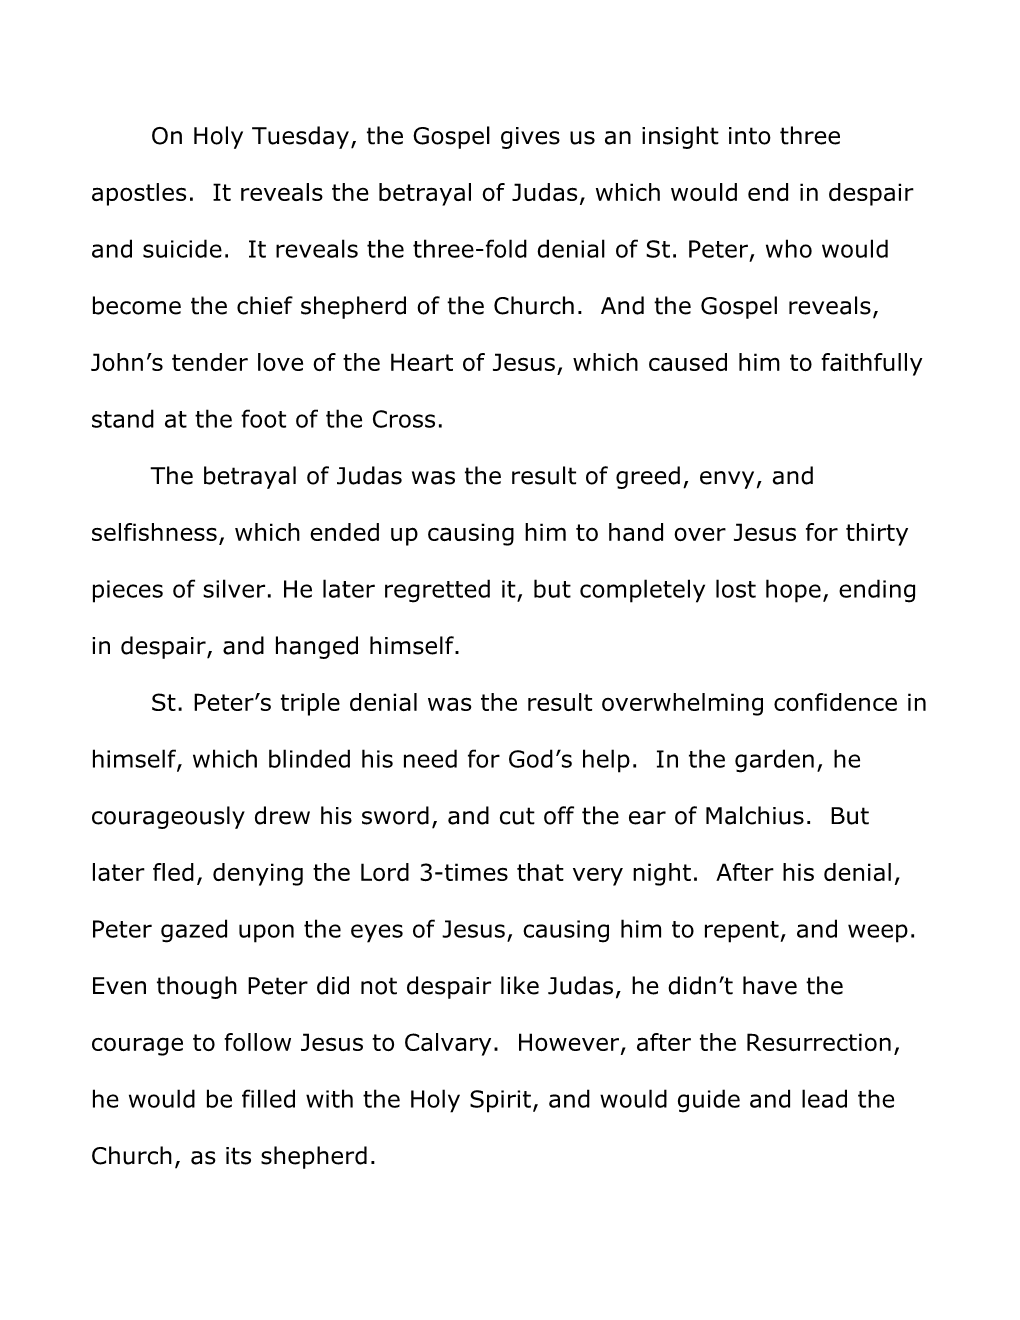 On Holy Tuesday, the Gospel Reveals the Betrayal of Judas, the Three-Fold Denial of St